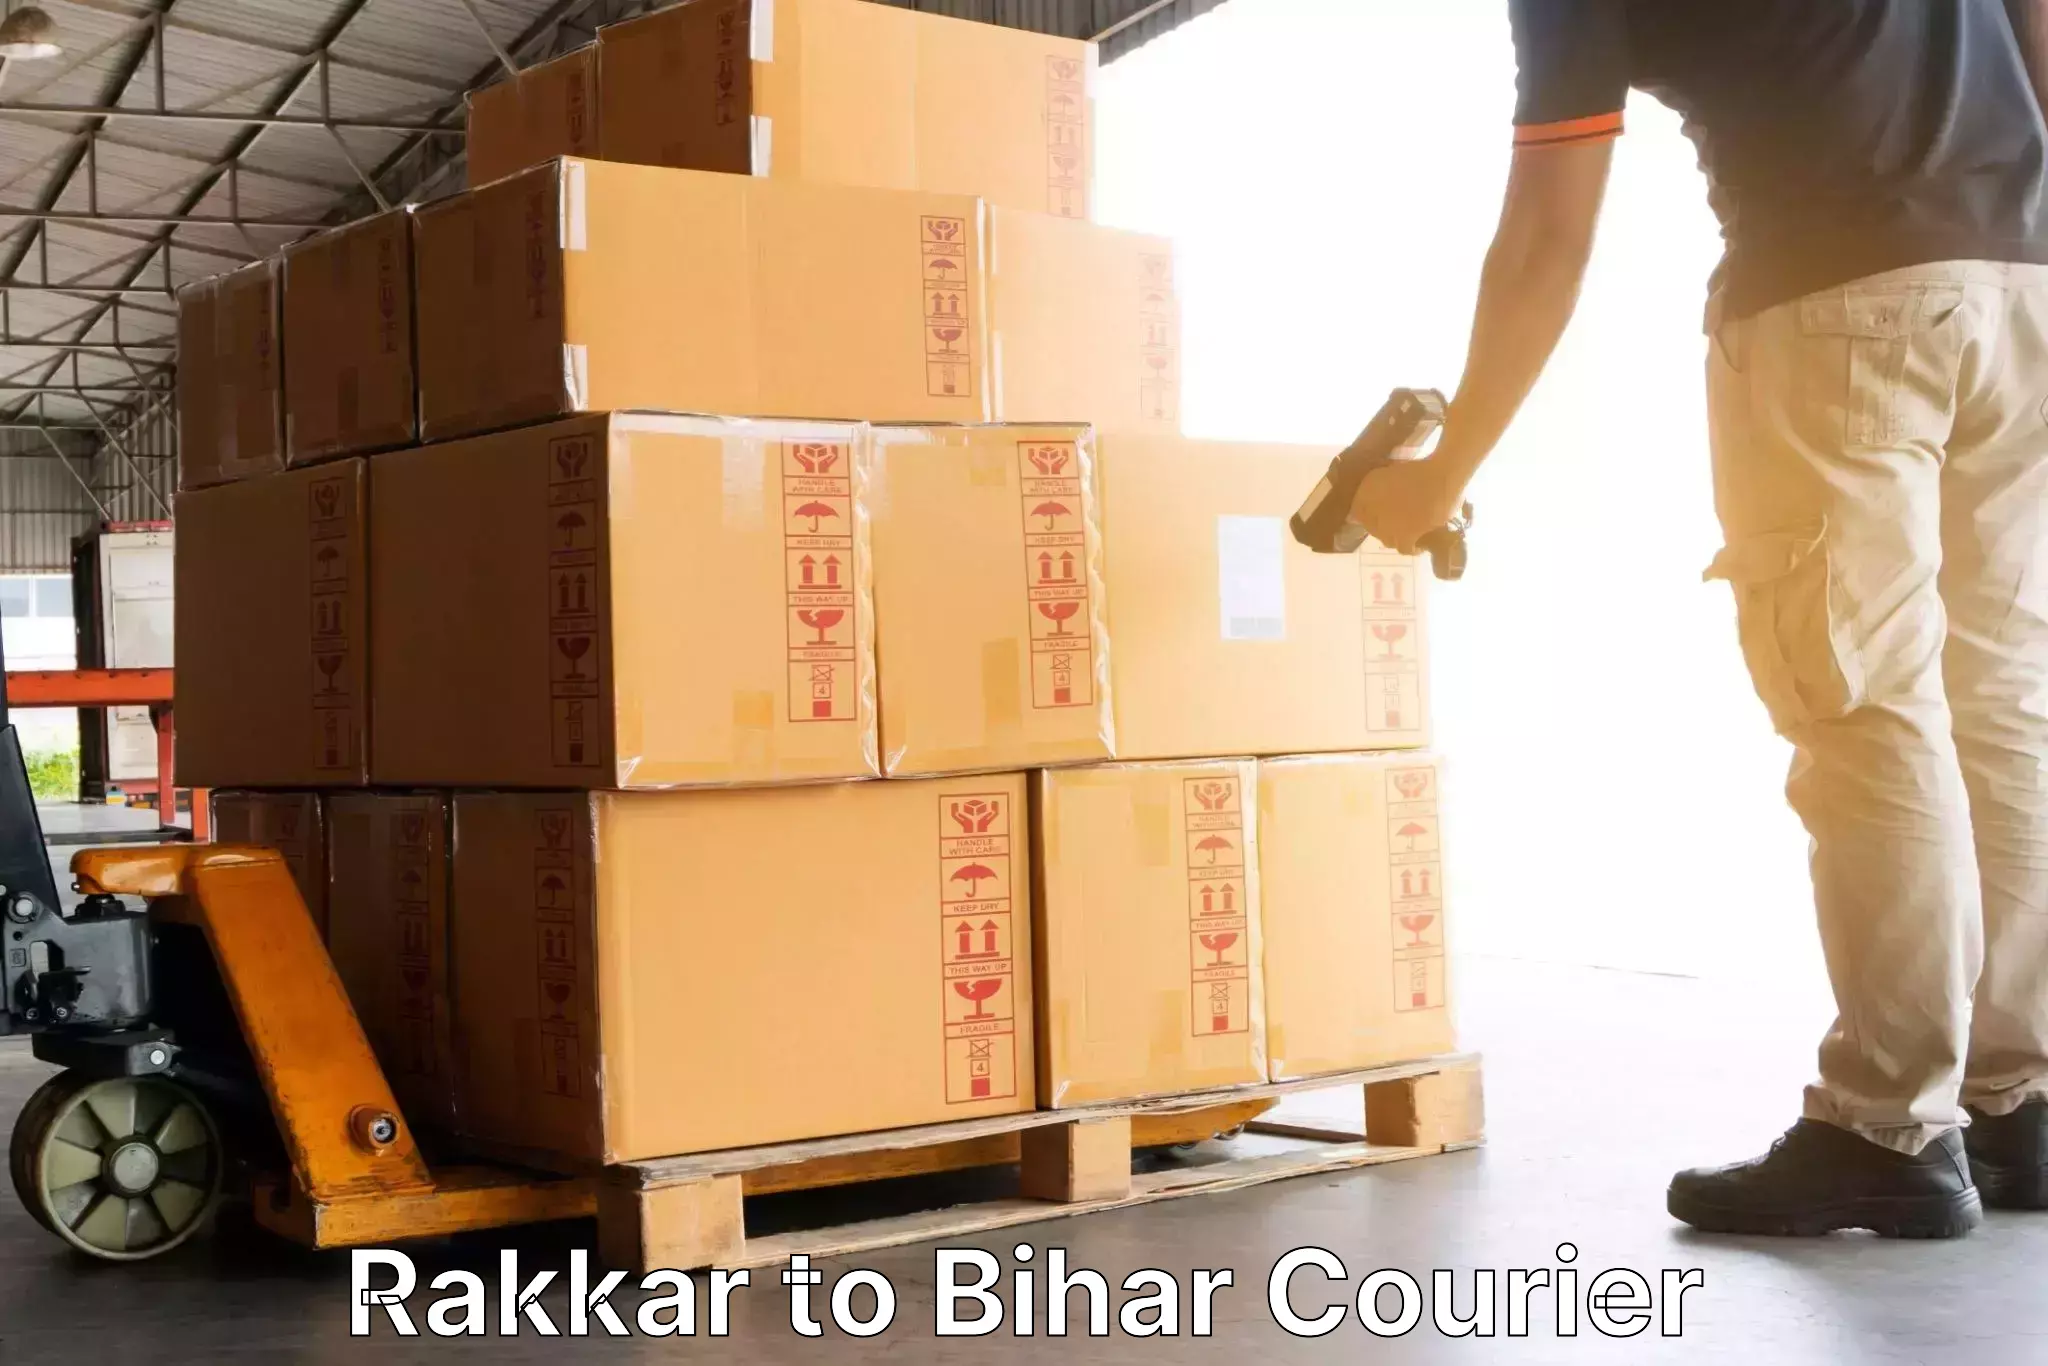 Courier service efficiency Rakkar to Brahmapur